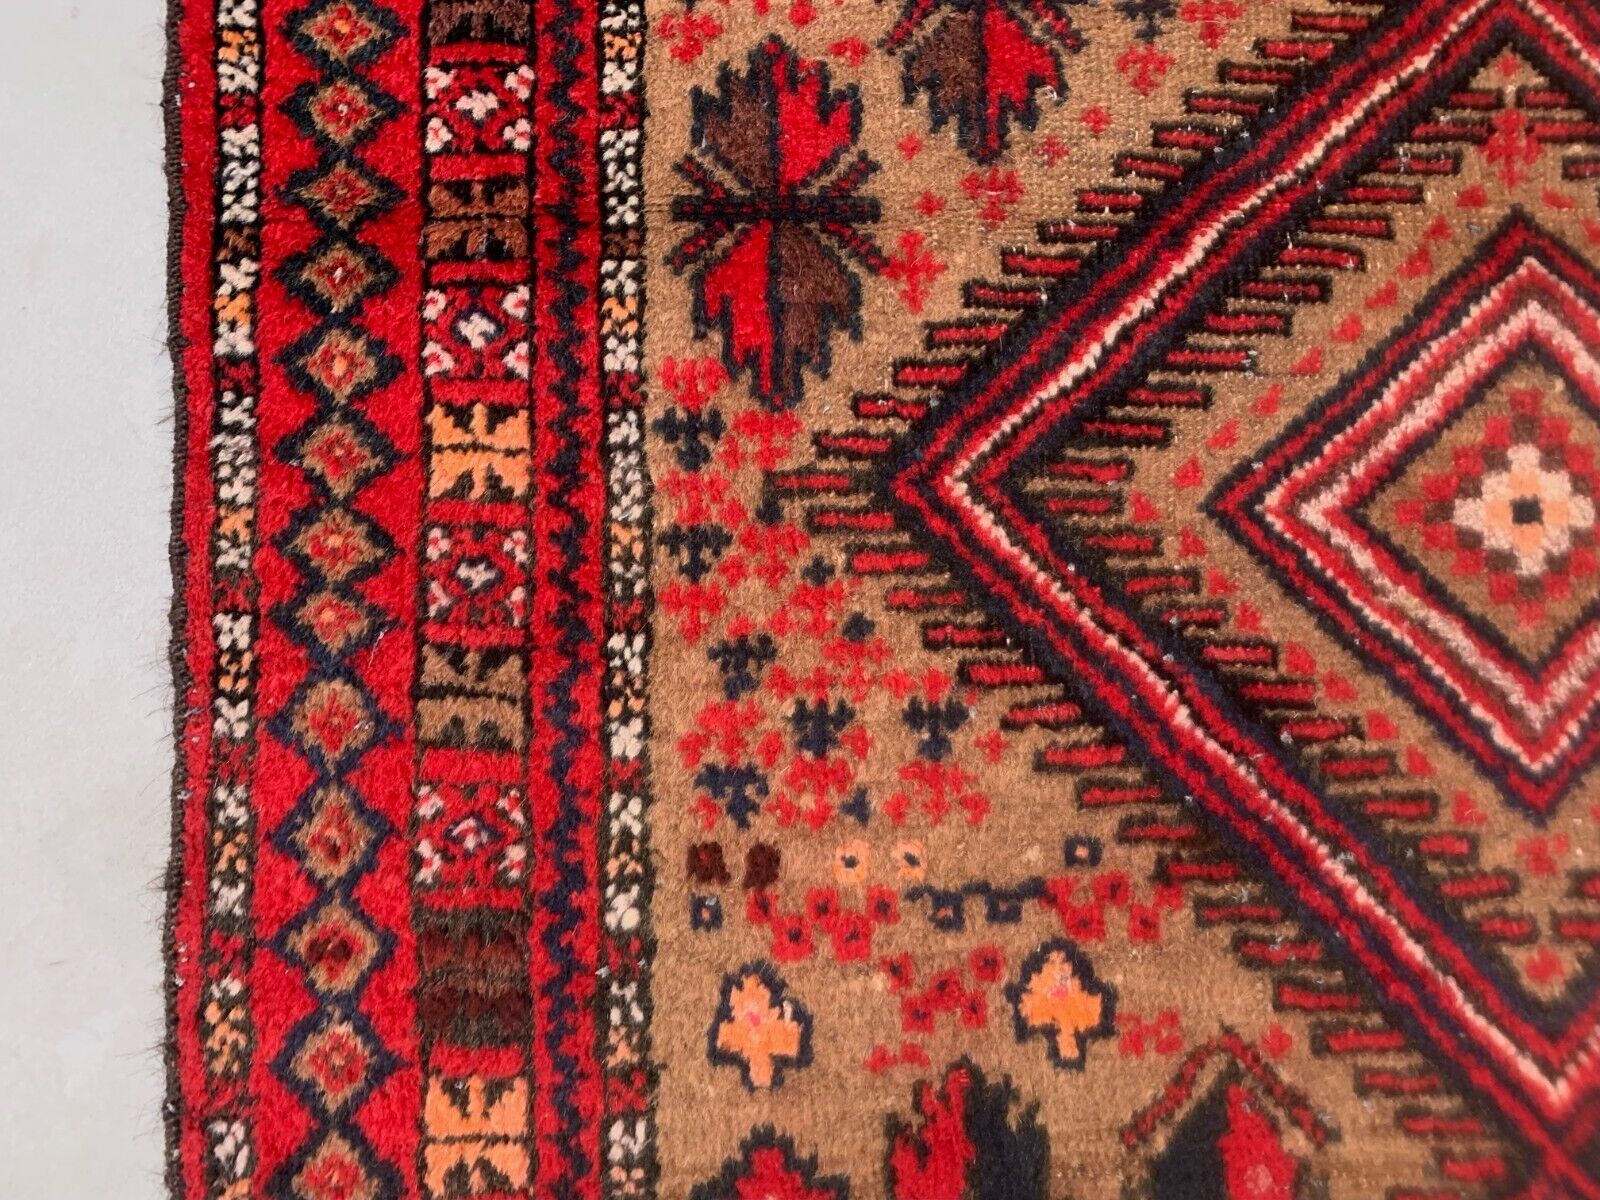 Vintage Afghan Village Rug 138x85 cm, Red, Black Tribal Small